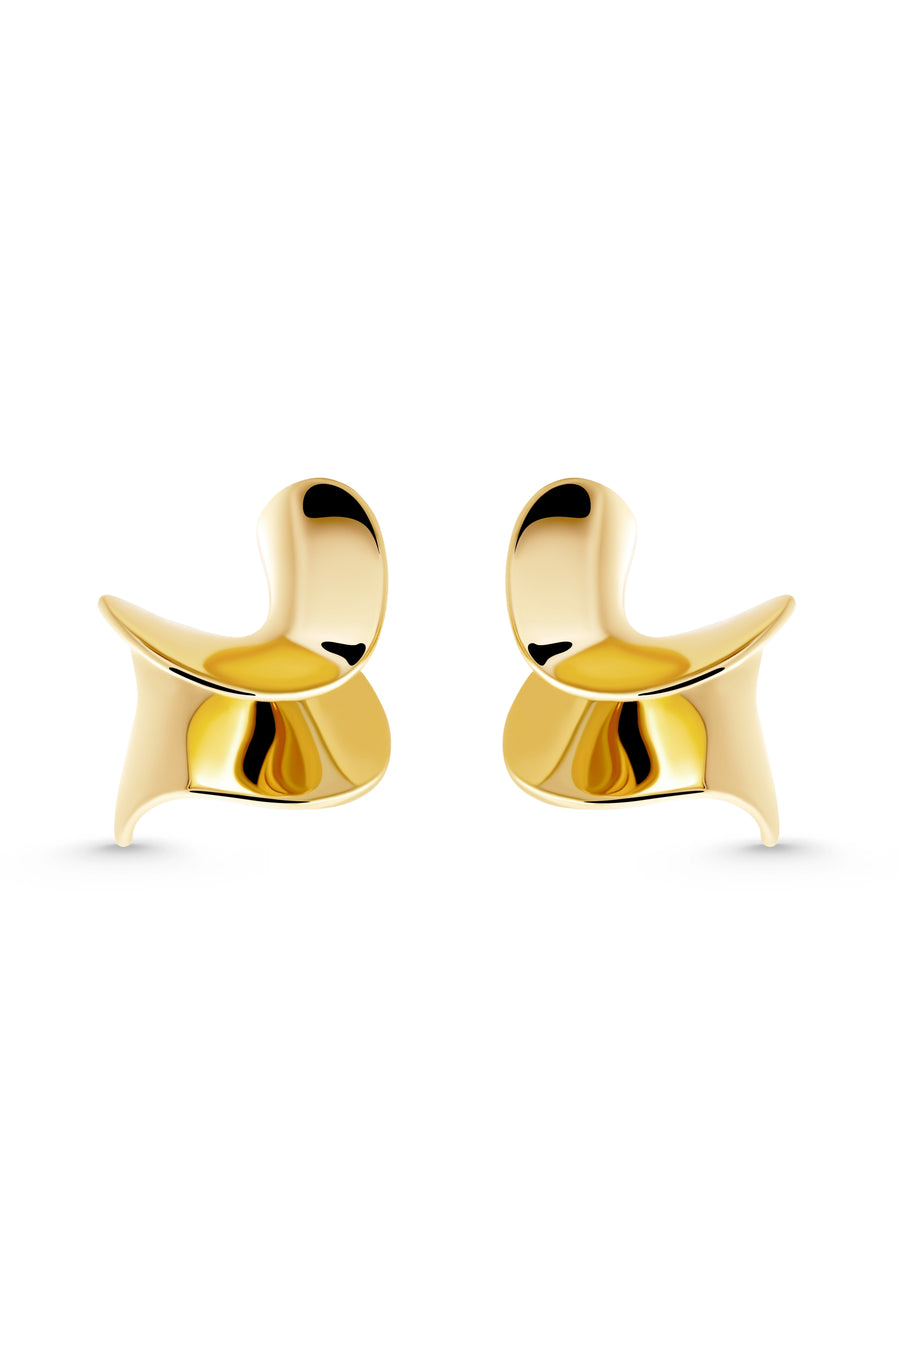 SIERRA STUDS. Swirled icing-shaped stud earrings in high gloss finish, 18K gold vermeil, handmade, hypoallergenic, water-resistant